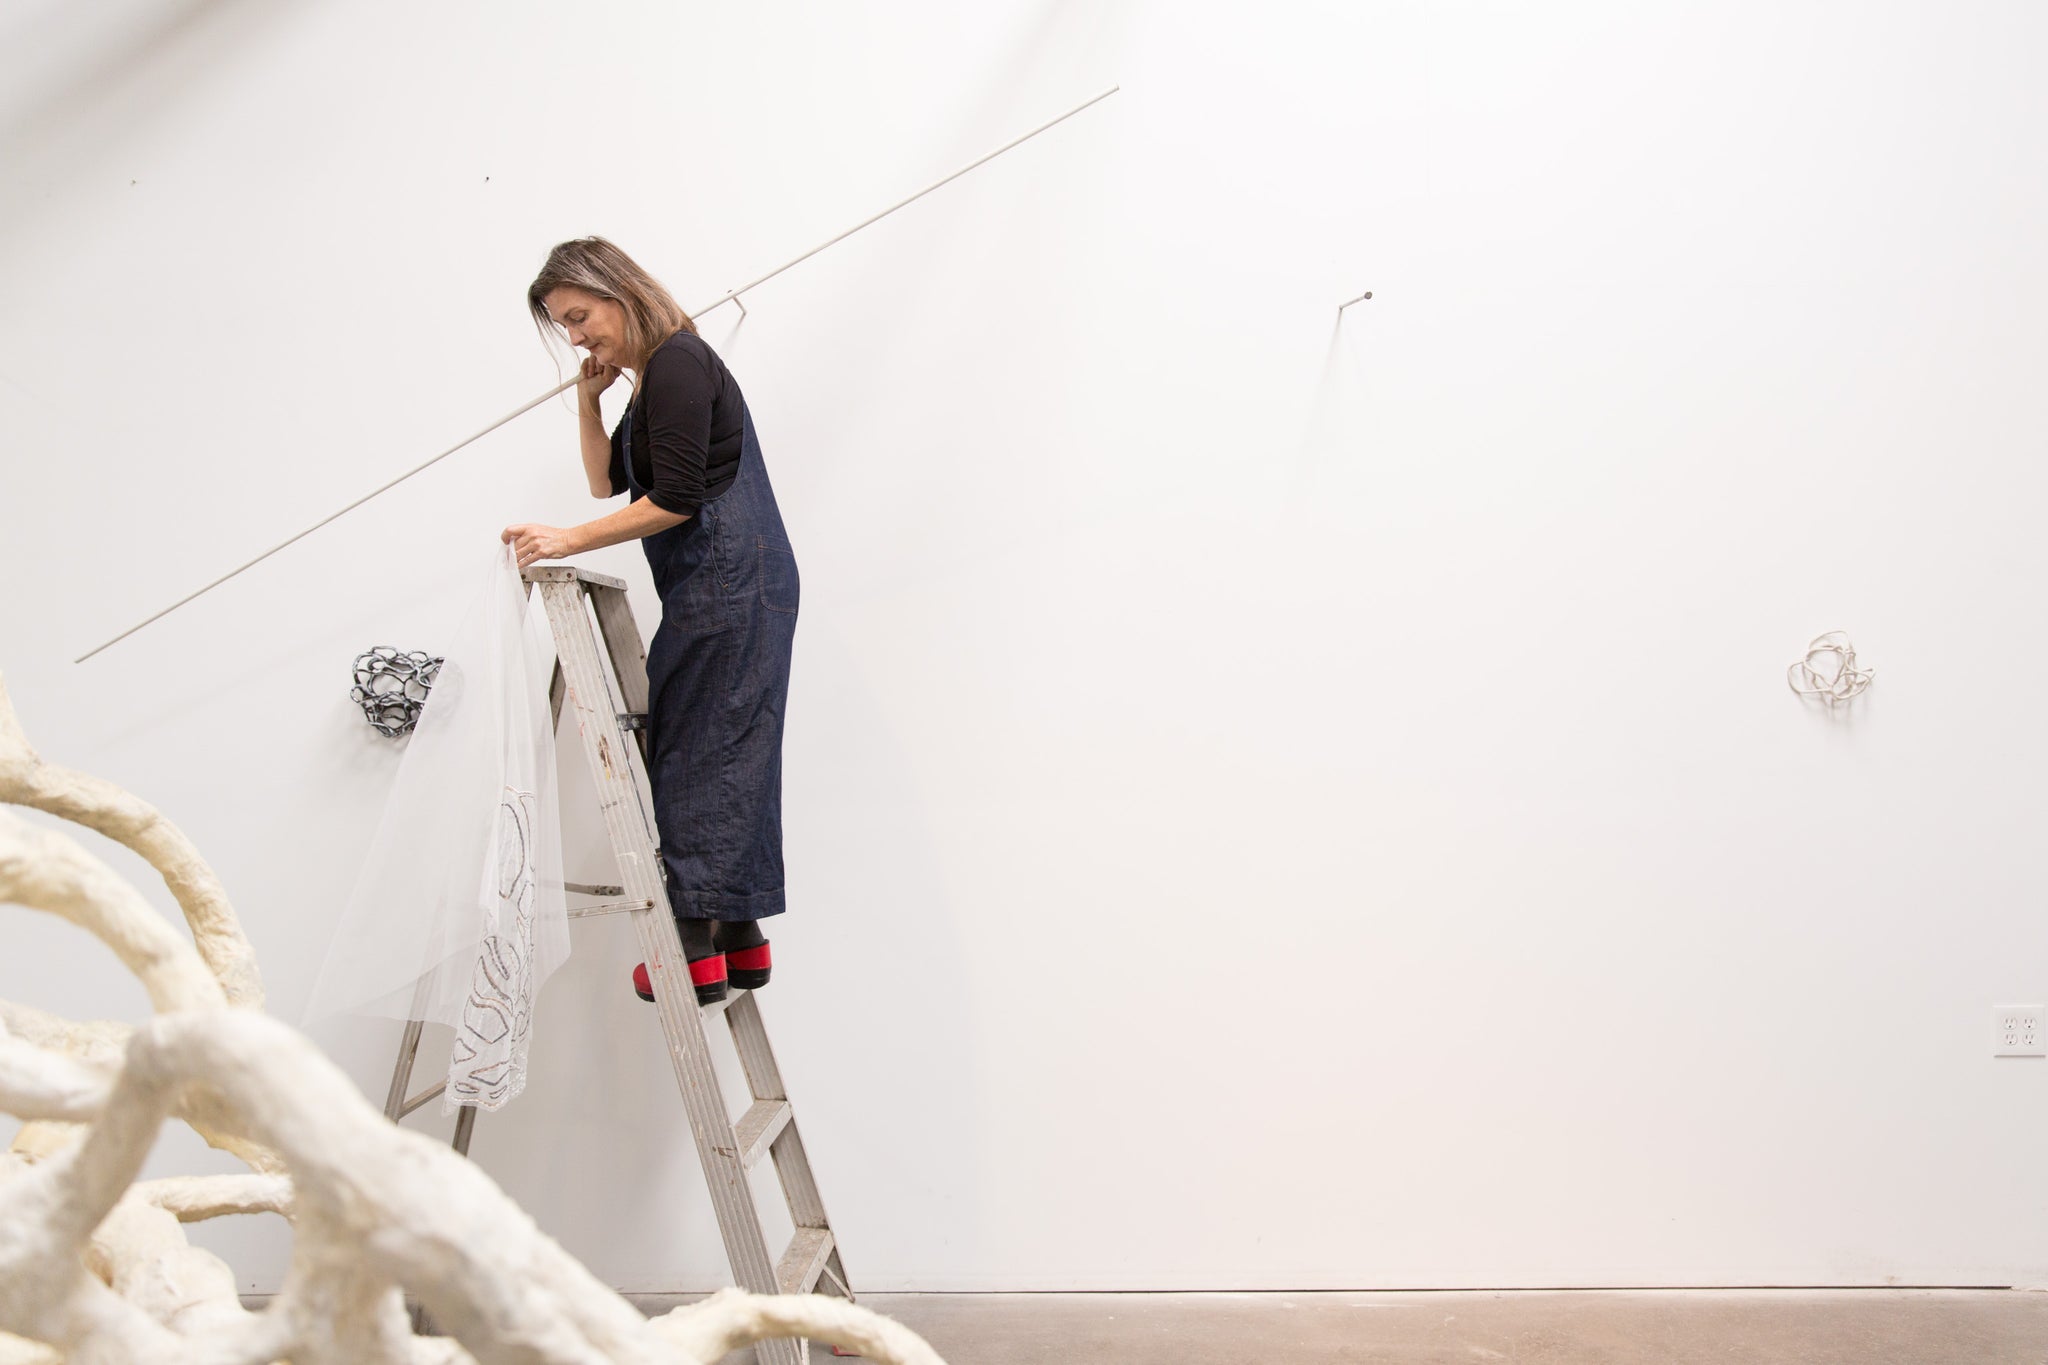 artist, Laura Cooper, on ladder installing artwork